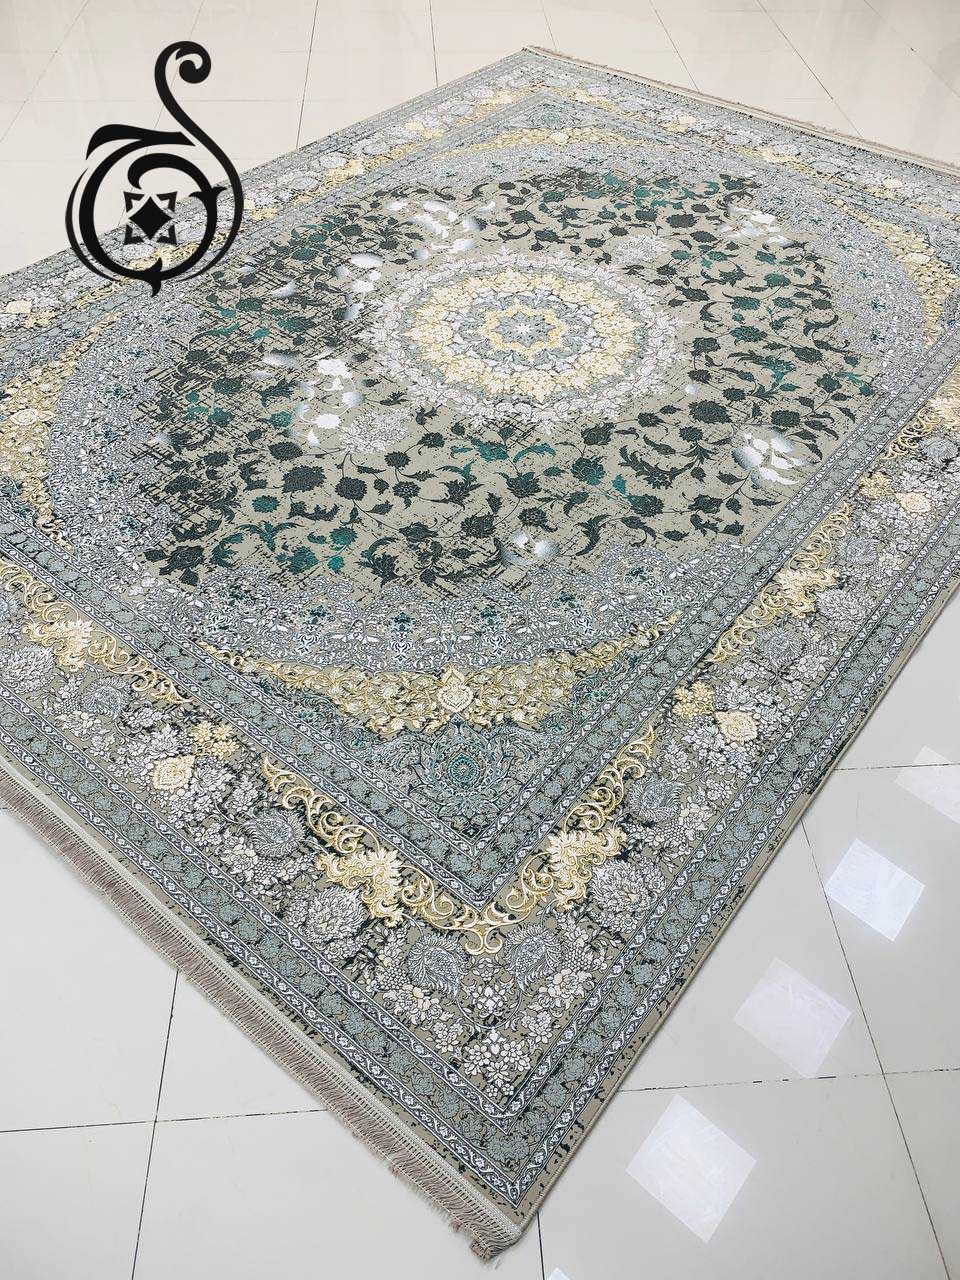 Carpet 1200 comb, density 3600, prominent Saghar design, cashmere, ten colors